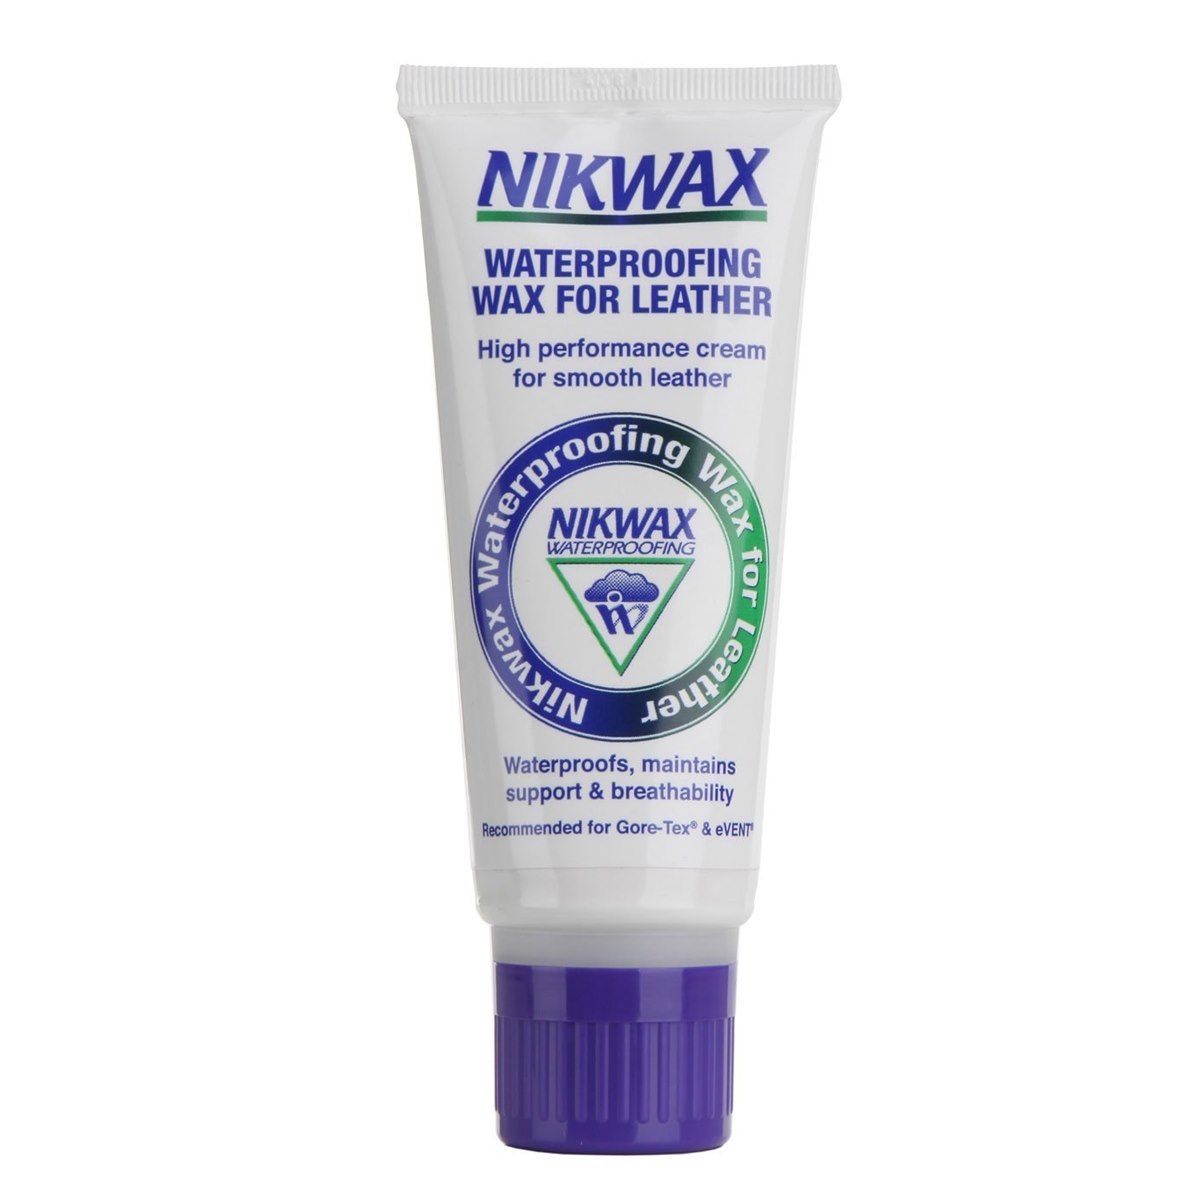 Nikwax Waterproofing Wax for Leather 